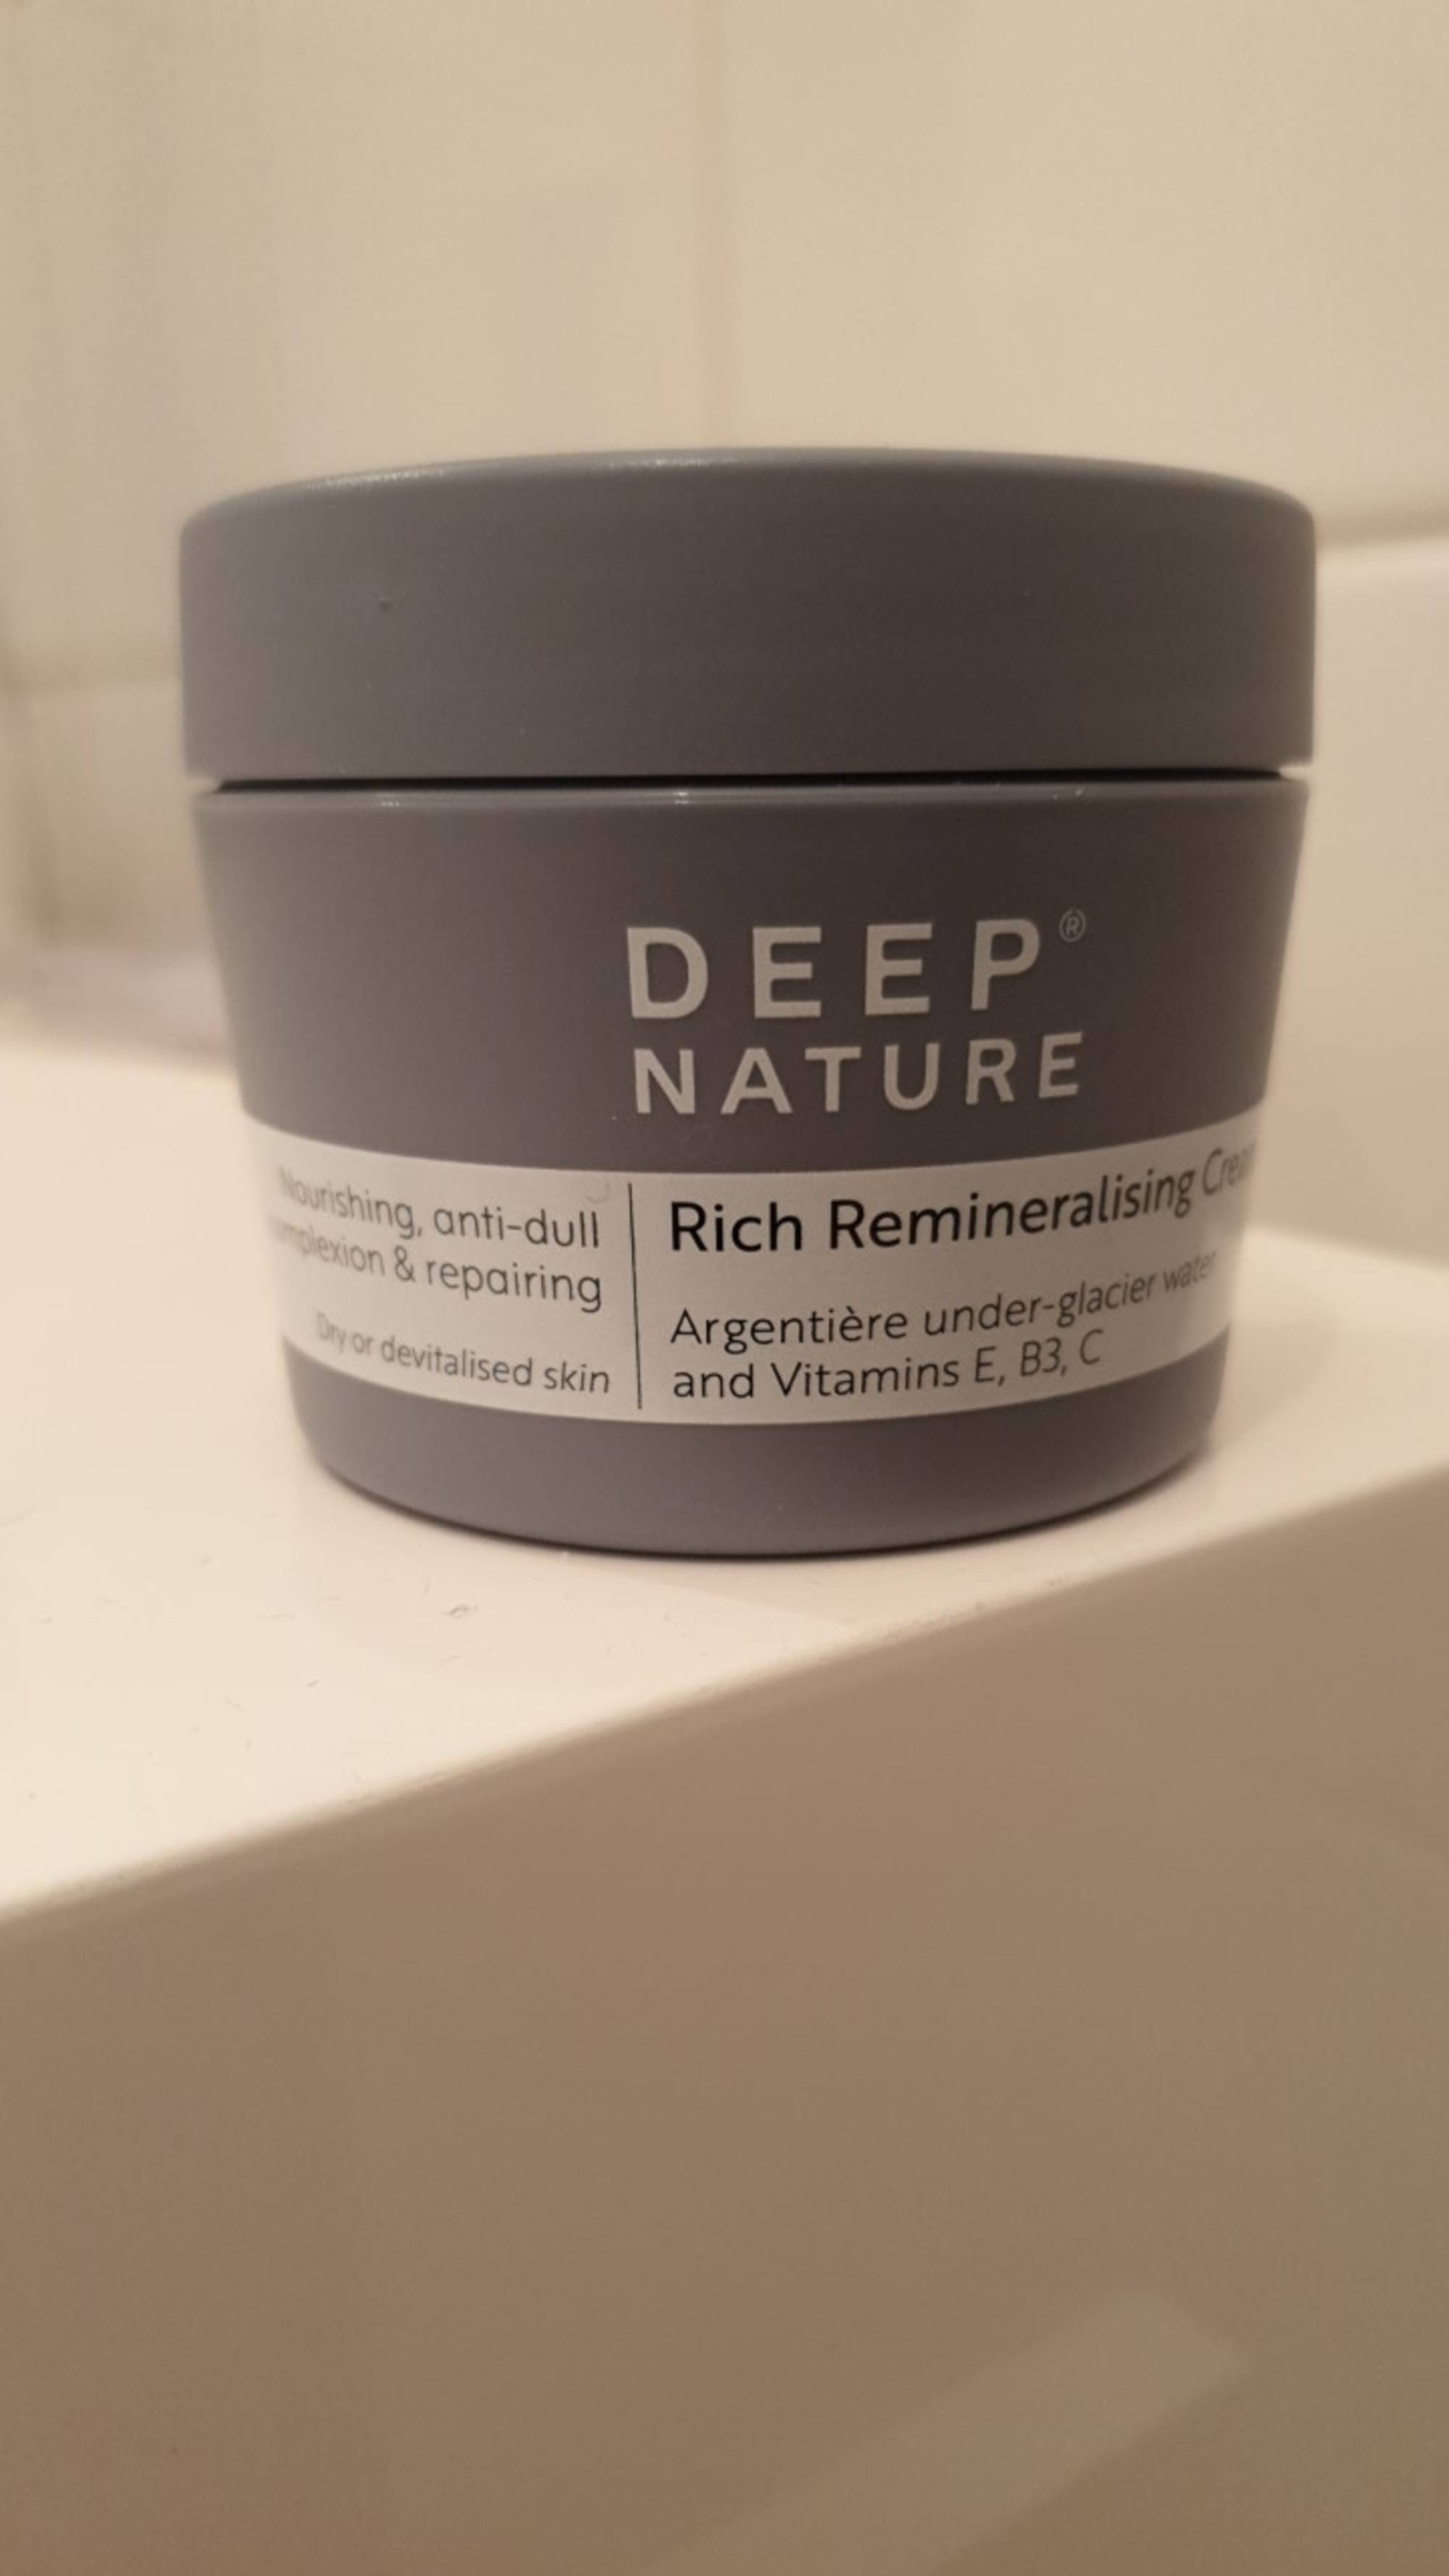 DEEP NATURE - Rich remineralising cream